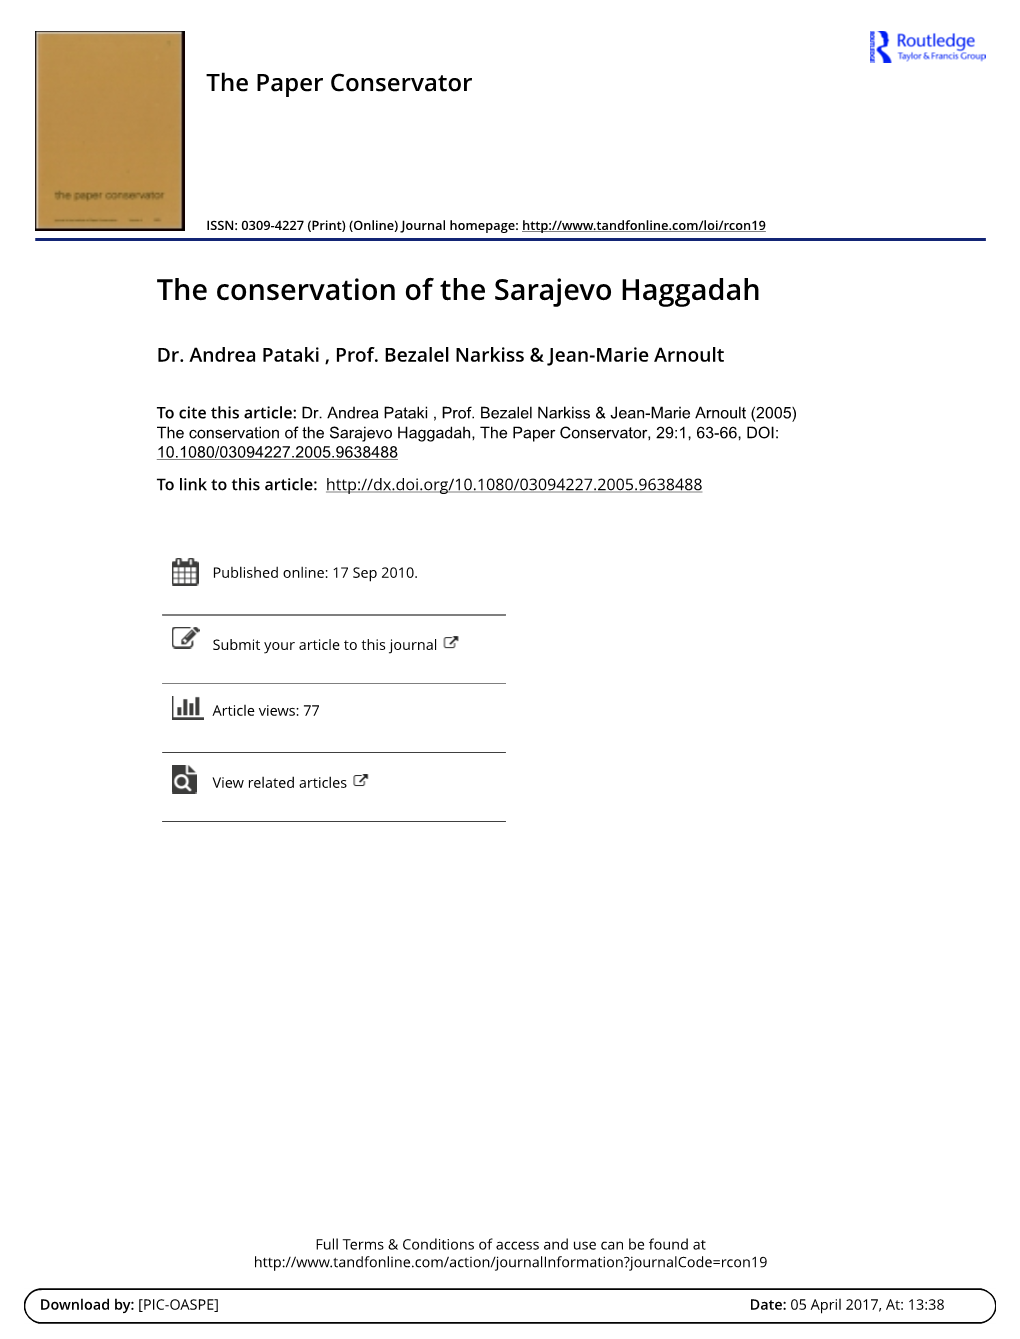 The Conservation of the Sarajevo Haggadah